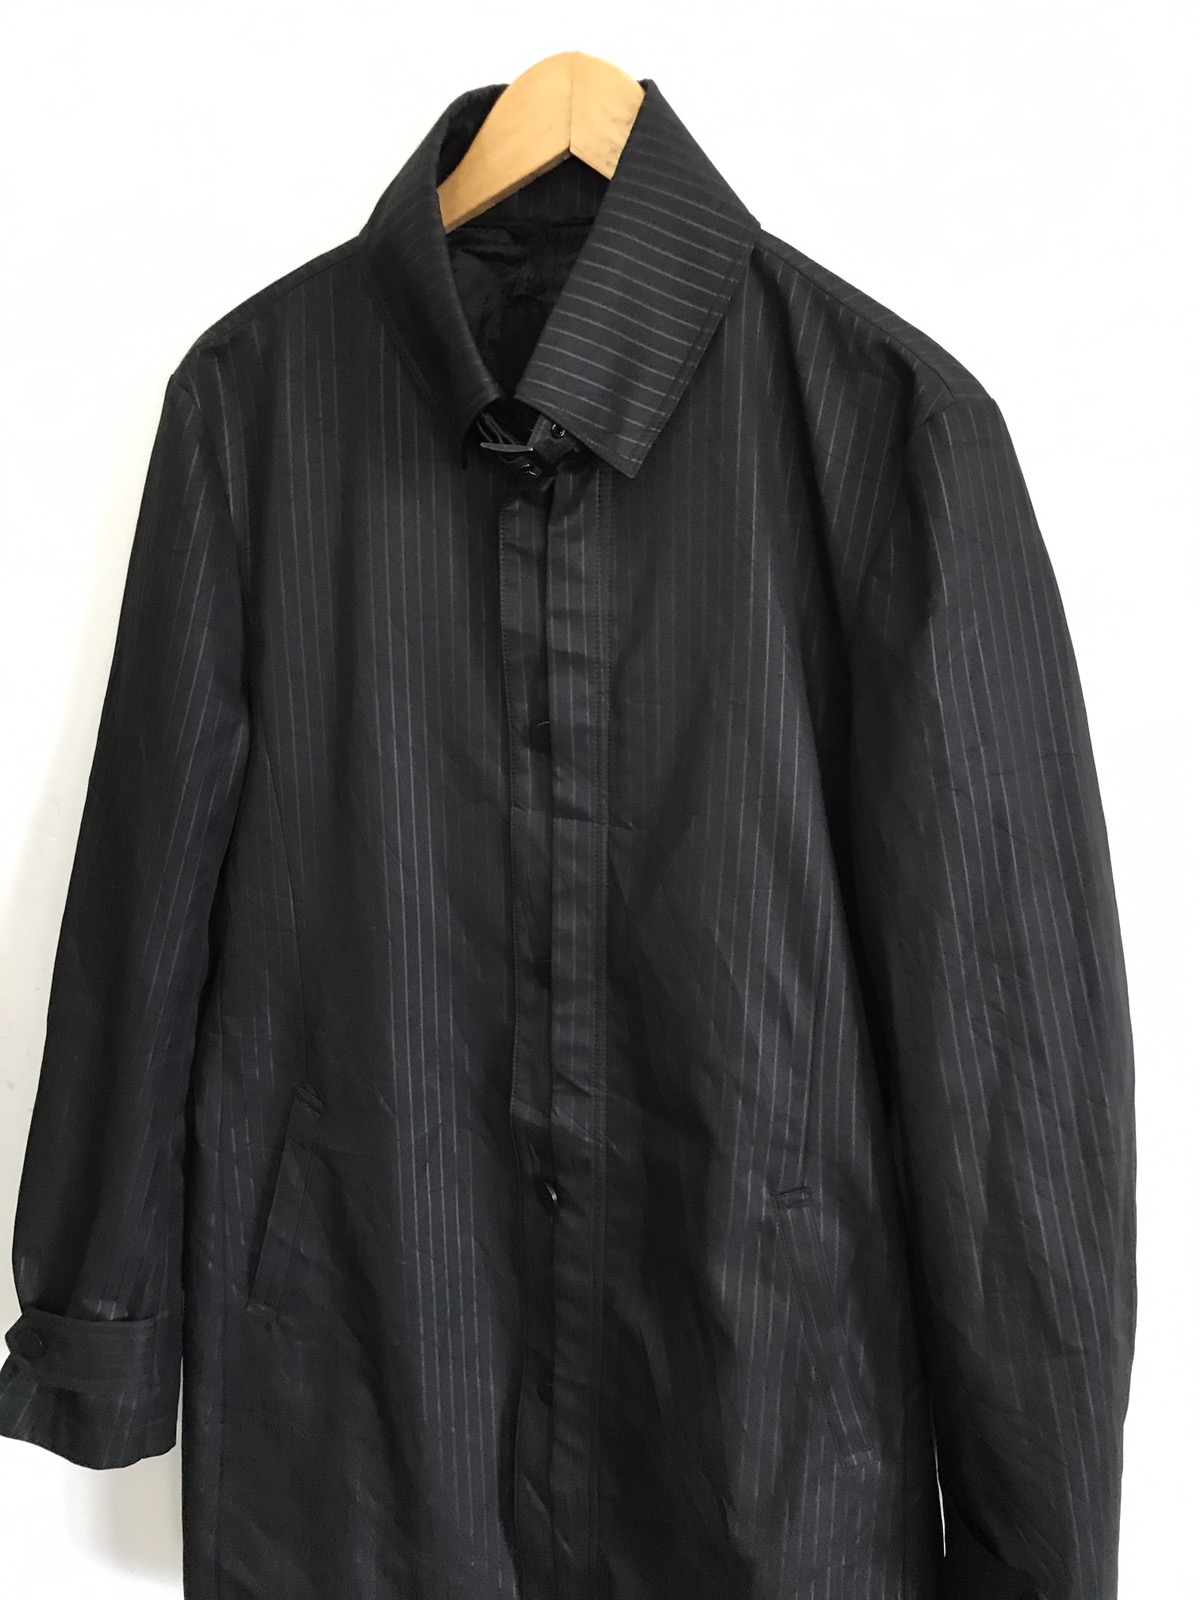 Japanese Brand Roen x Semantics Design Trench Coat Jacket - 2